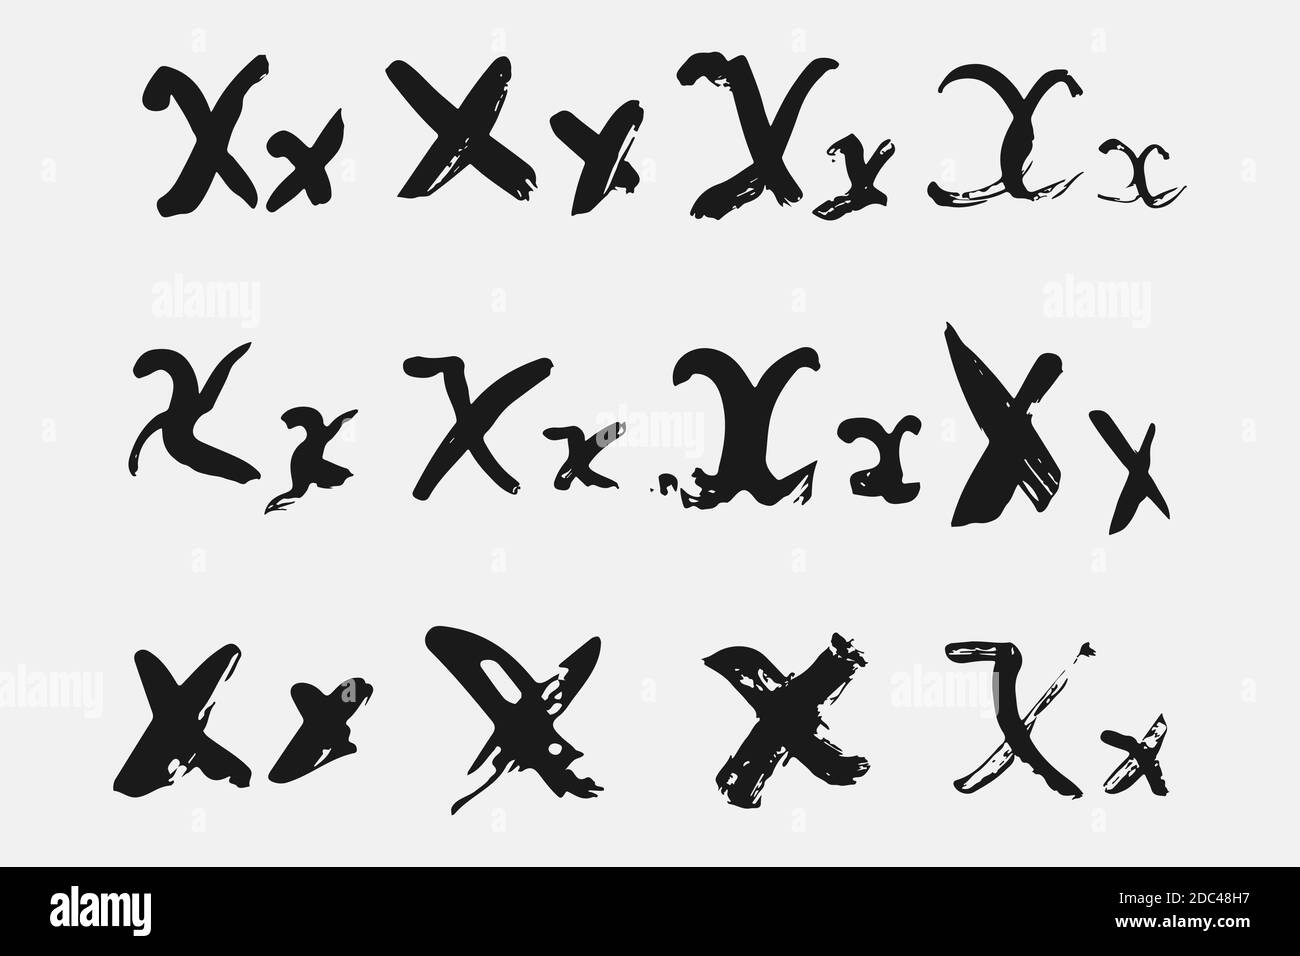 Black letter X written in grunge calligraphy. Stock Vector